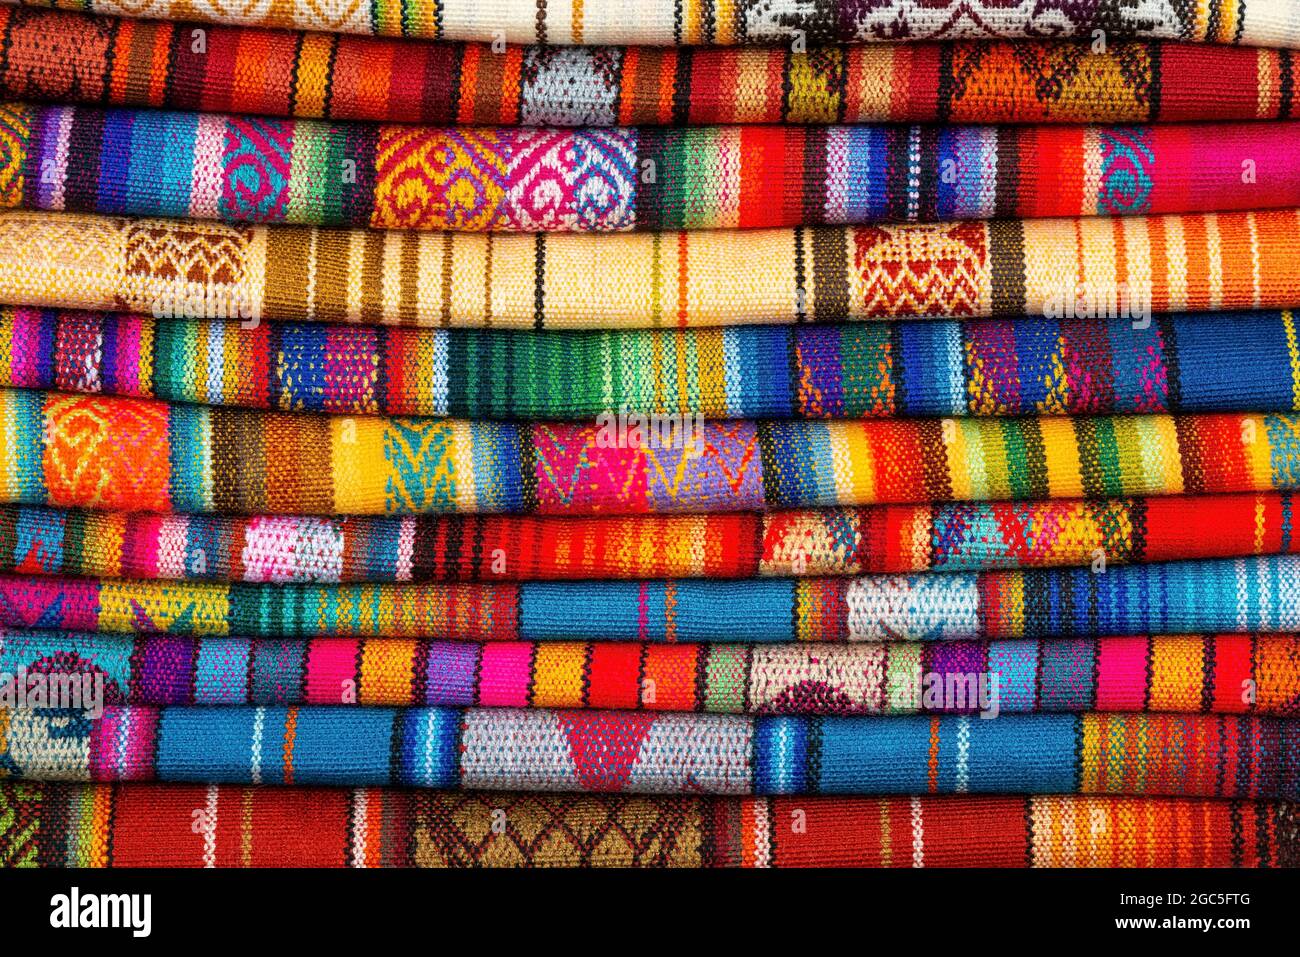 Mercado textil andino peru fotografías e imágenes de alta resolución - Alamy